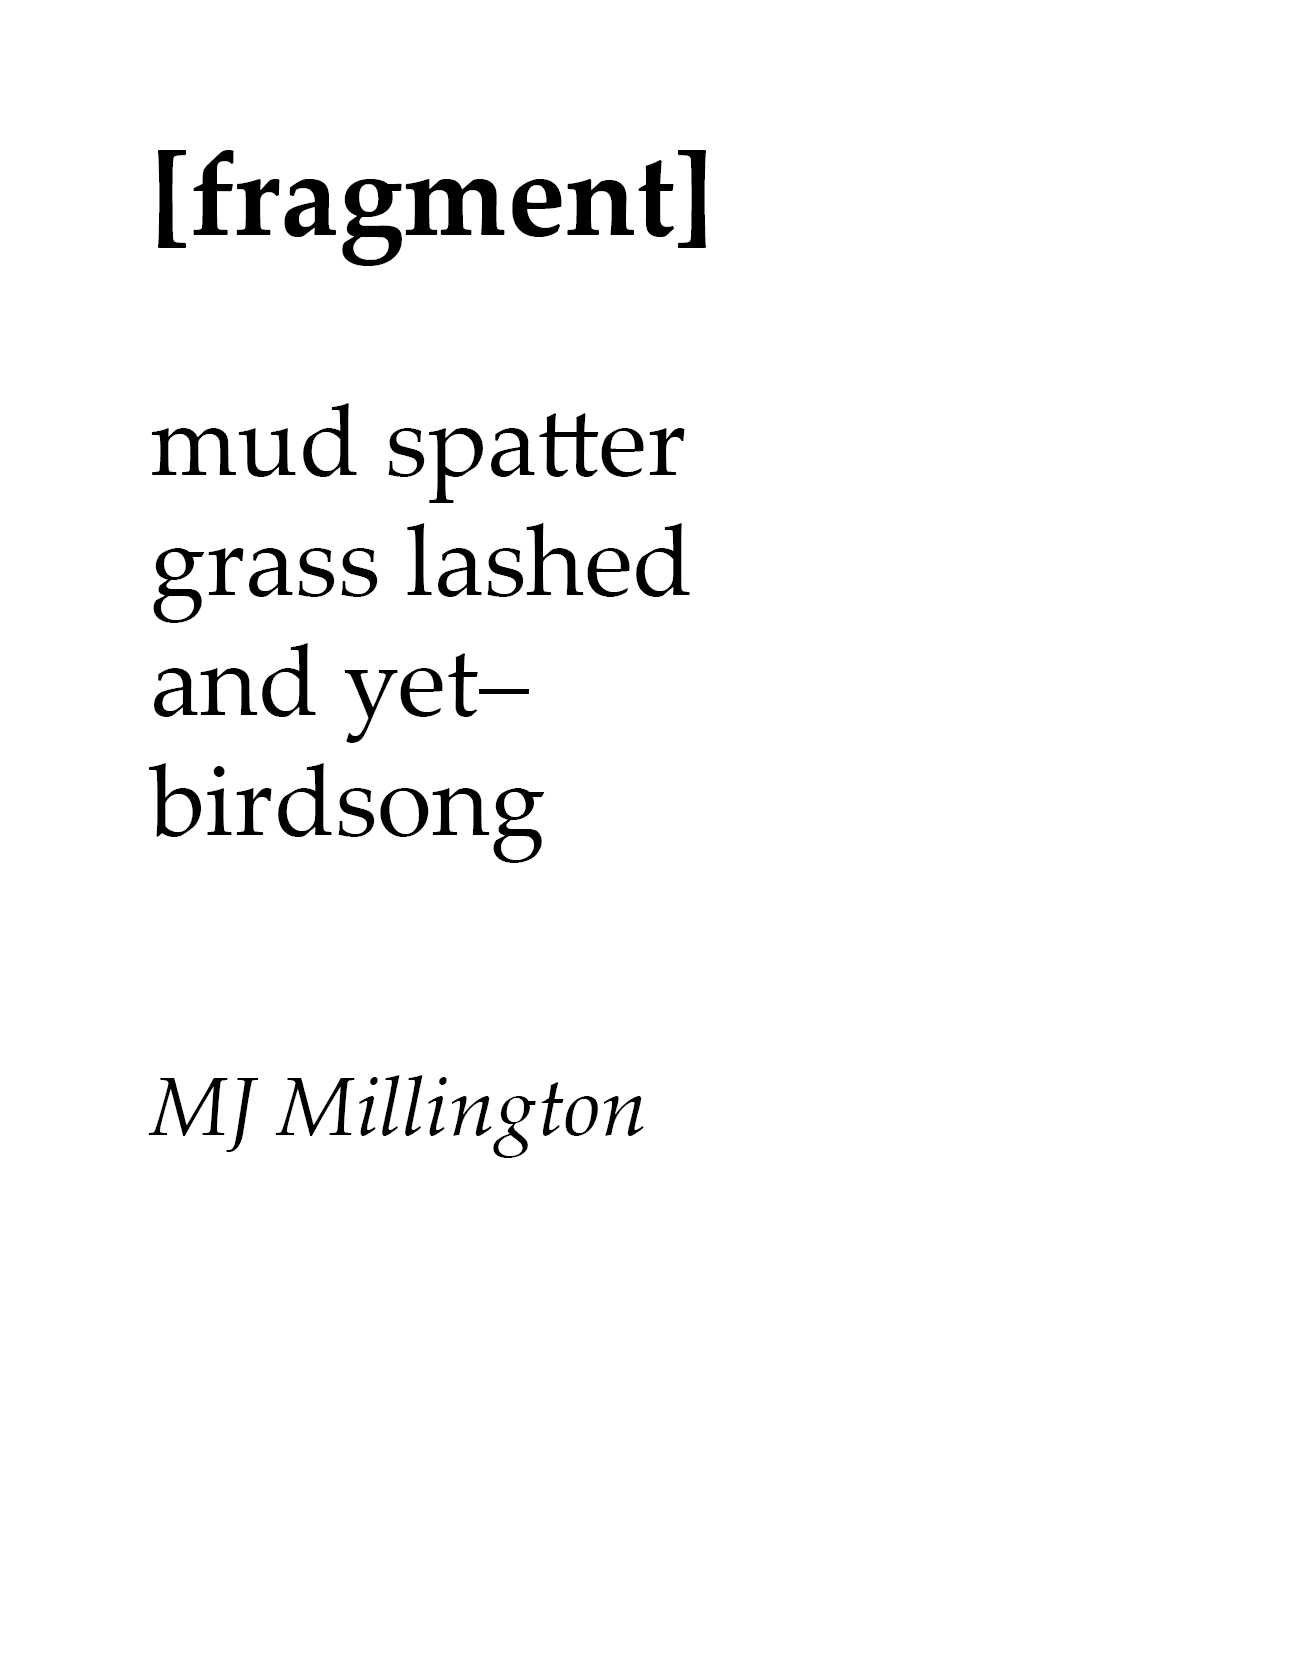 Ostrakon poem fragments8.png